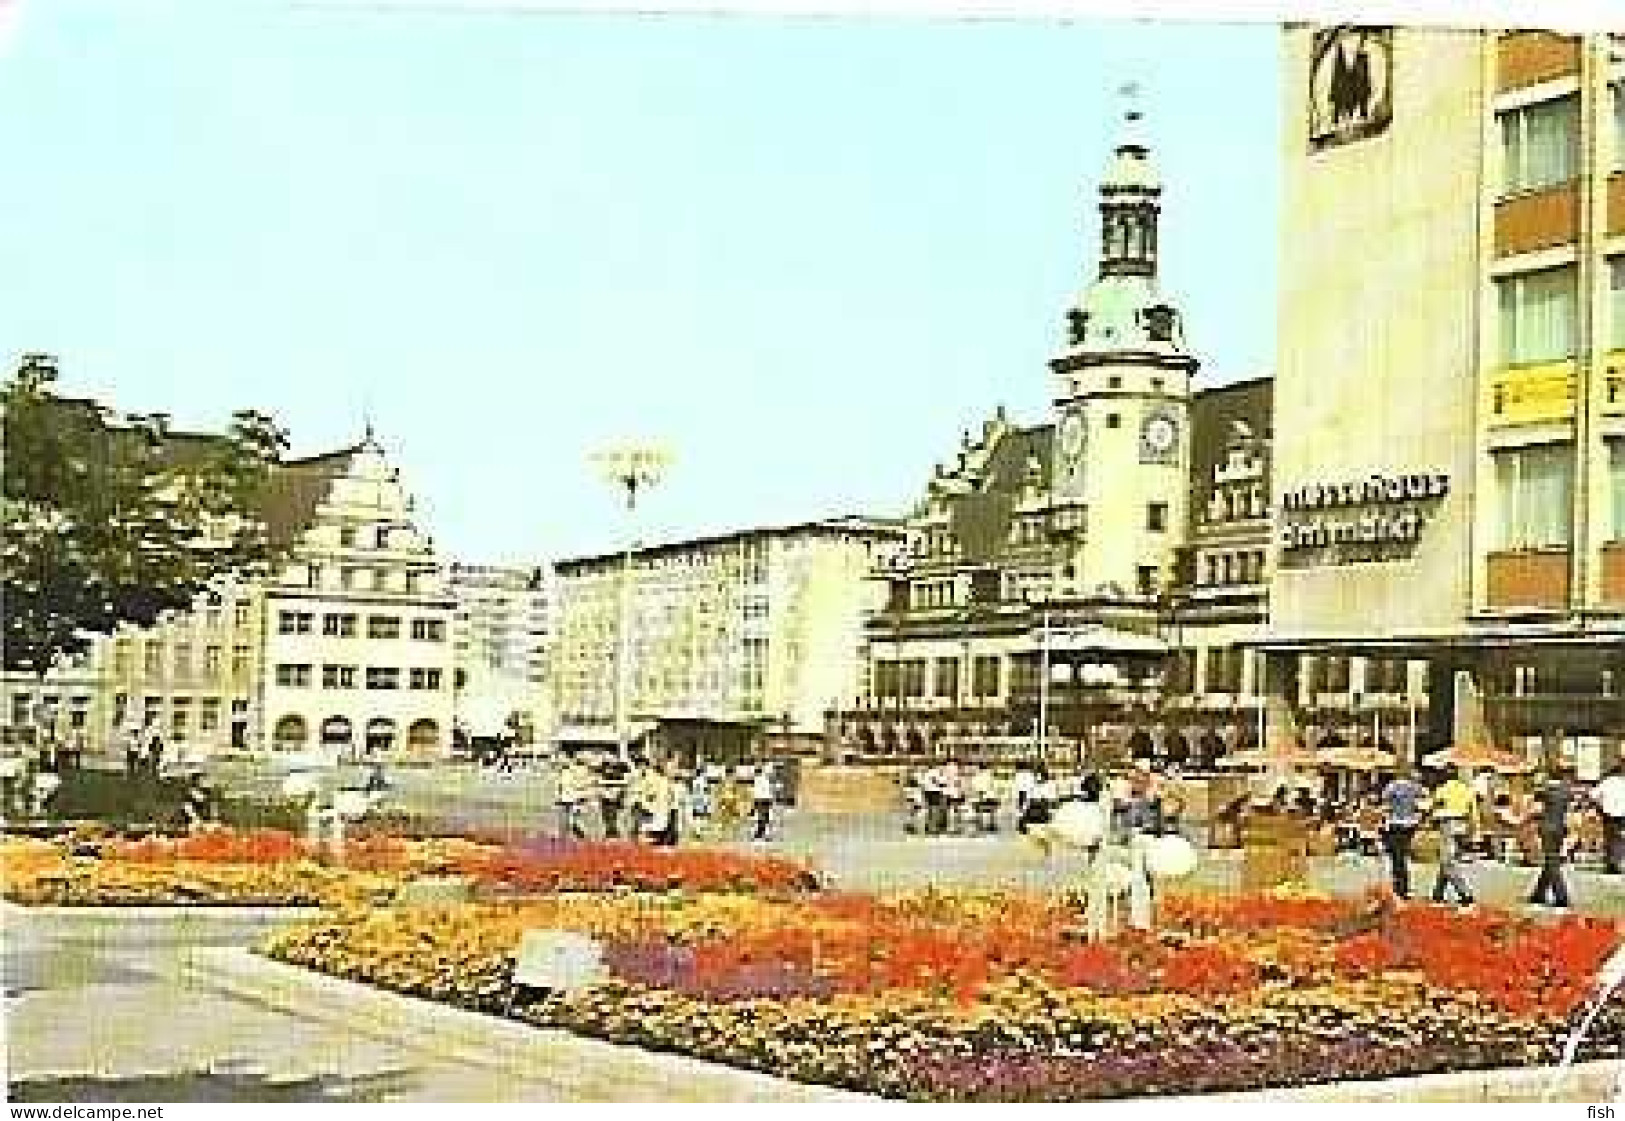 Germany  & Messesstadt Leipzig , Altes Rathaus Am Markt, Karl Marx Stad DDR To  Oeiras Portugal 1983 (7776) - Marchés